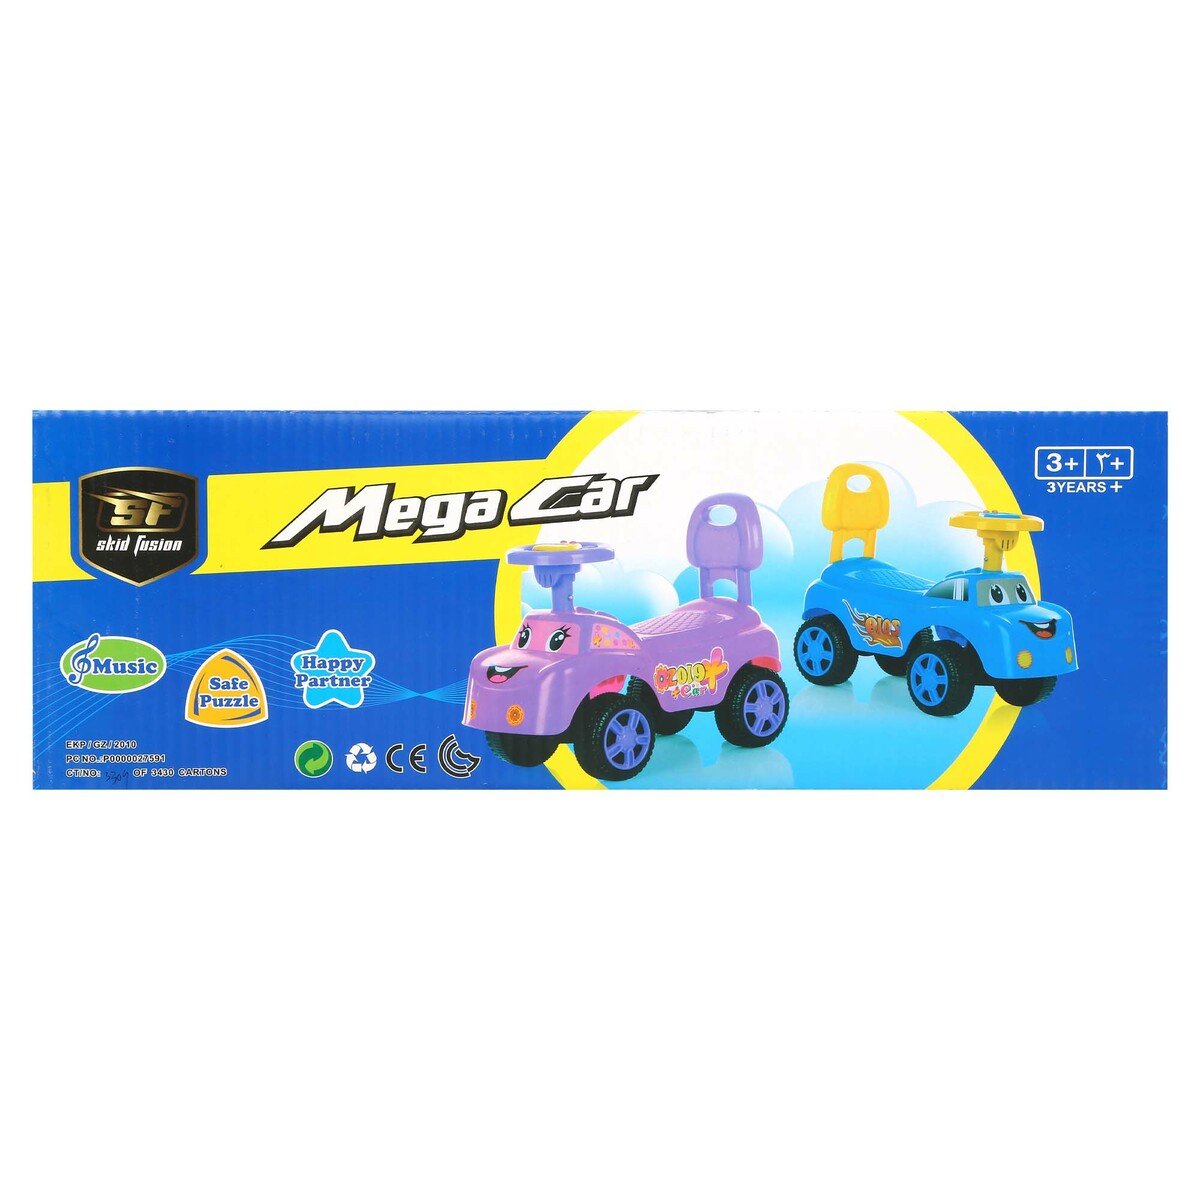 Skid Fusion Kids Ride On Car J-BC618A